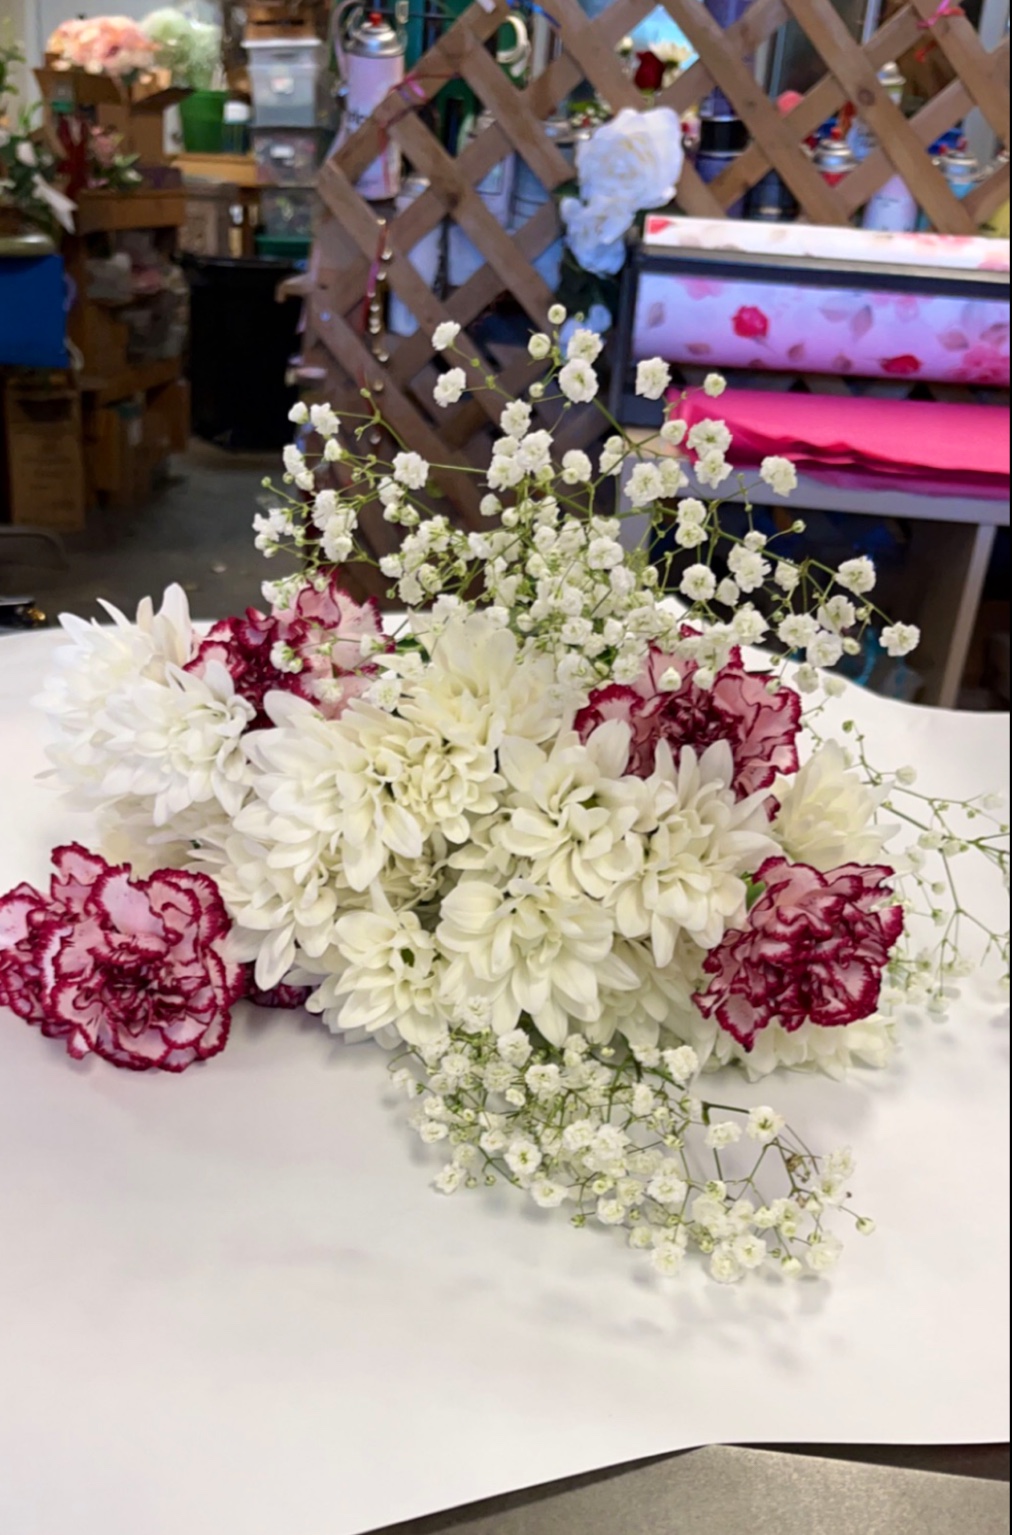 Flowers By Love Inc | 3450 S Hamilton Rd, Columbus, OH 43232 | Phone: (614) 863-0151